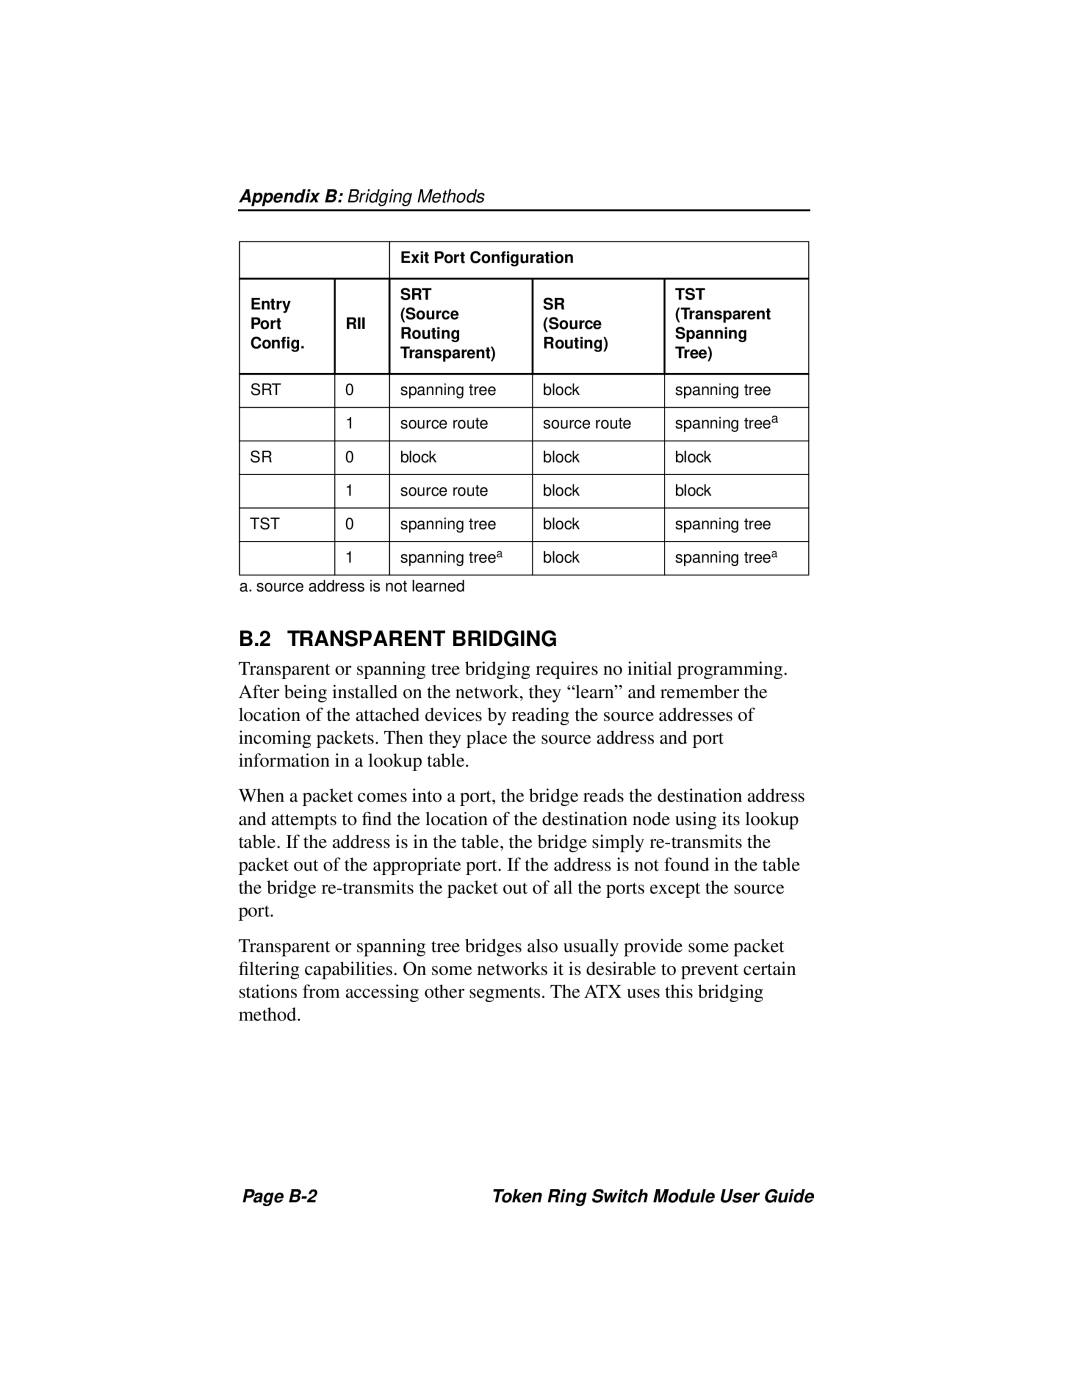 Cabletron Systems 3T02-04 manual B.2 TRANSPARENT BRIDGING, Appendix B Bridging Methods 